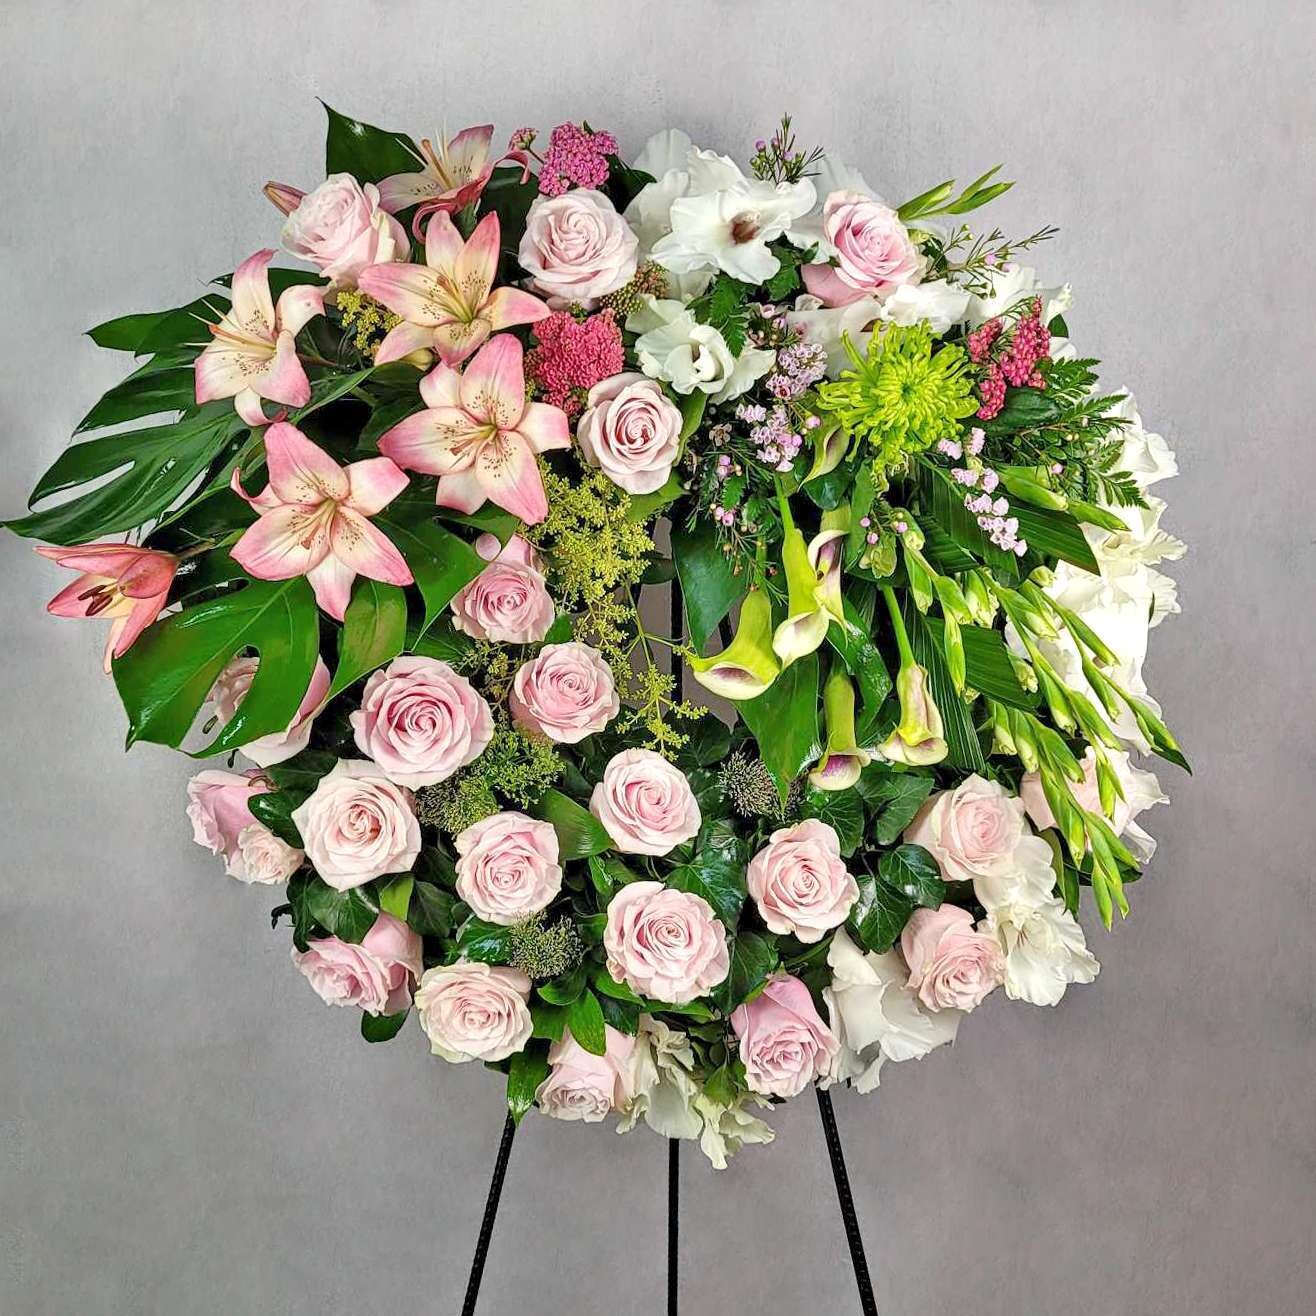 Funeral wreath in soft tones